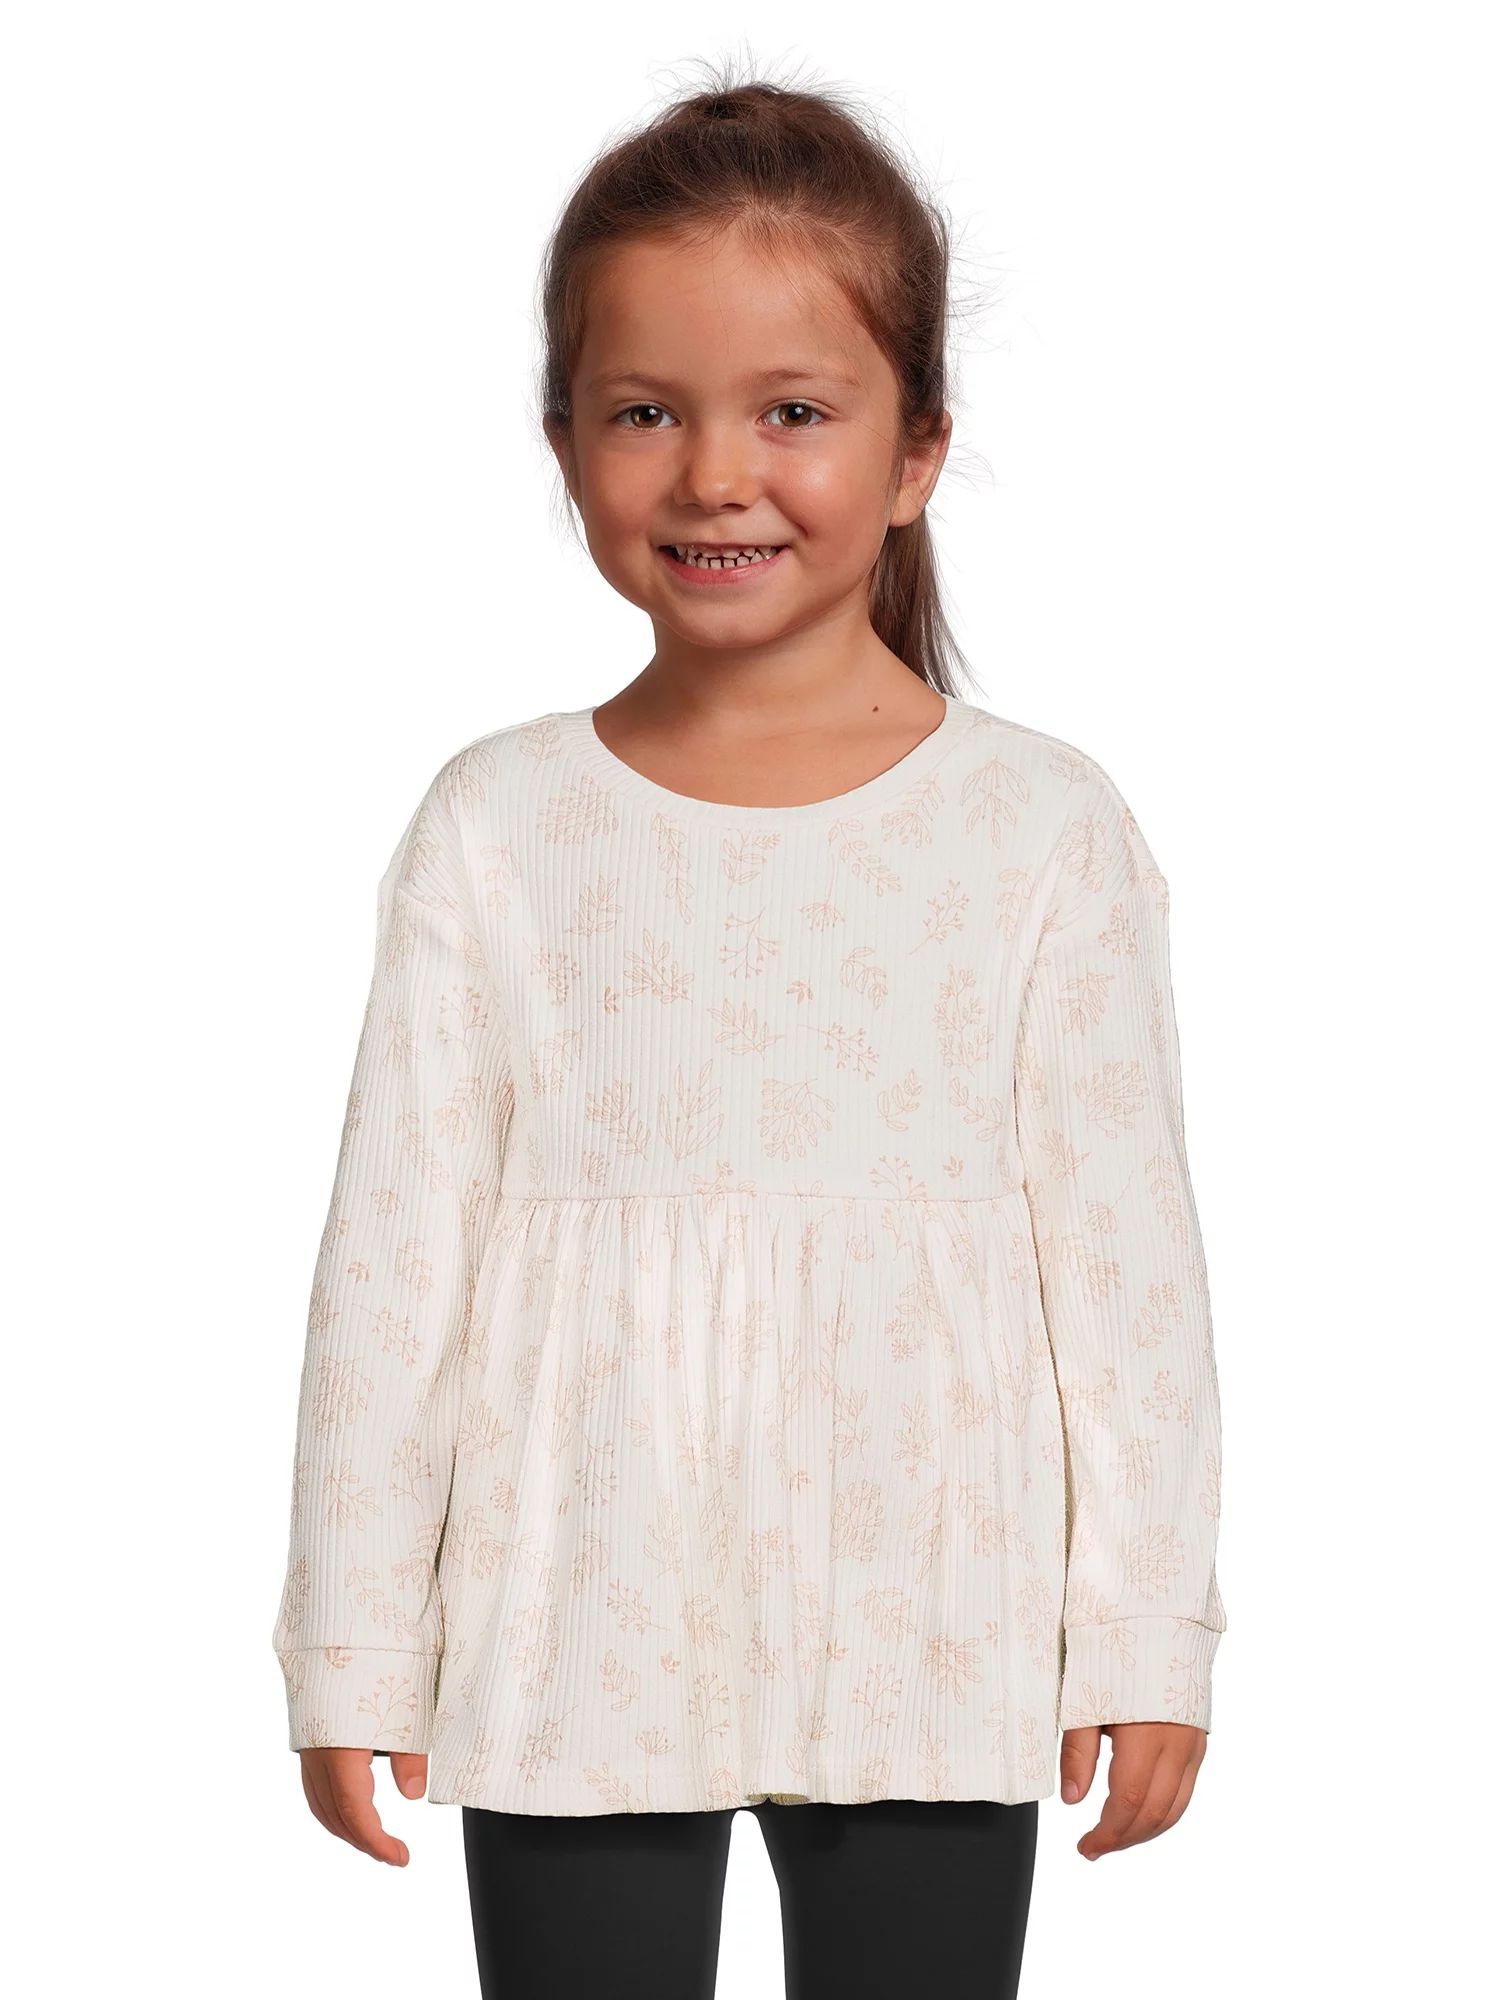 easy-peasy Toddler Girl Long Sleeve Babydoll Top, Sizes 12M-5T | Walmart (US)